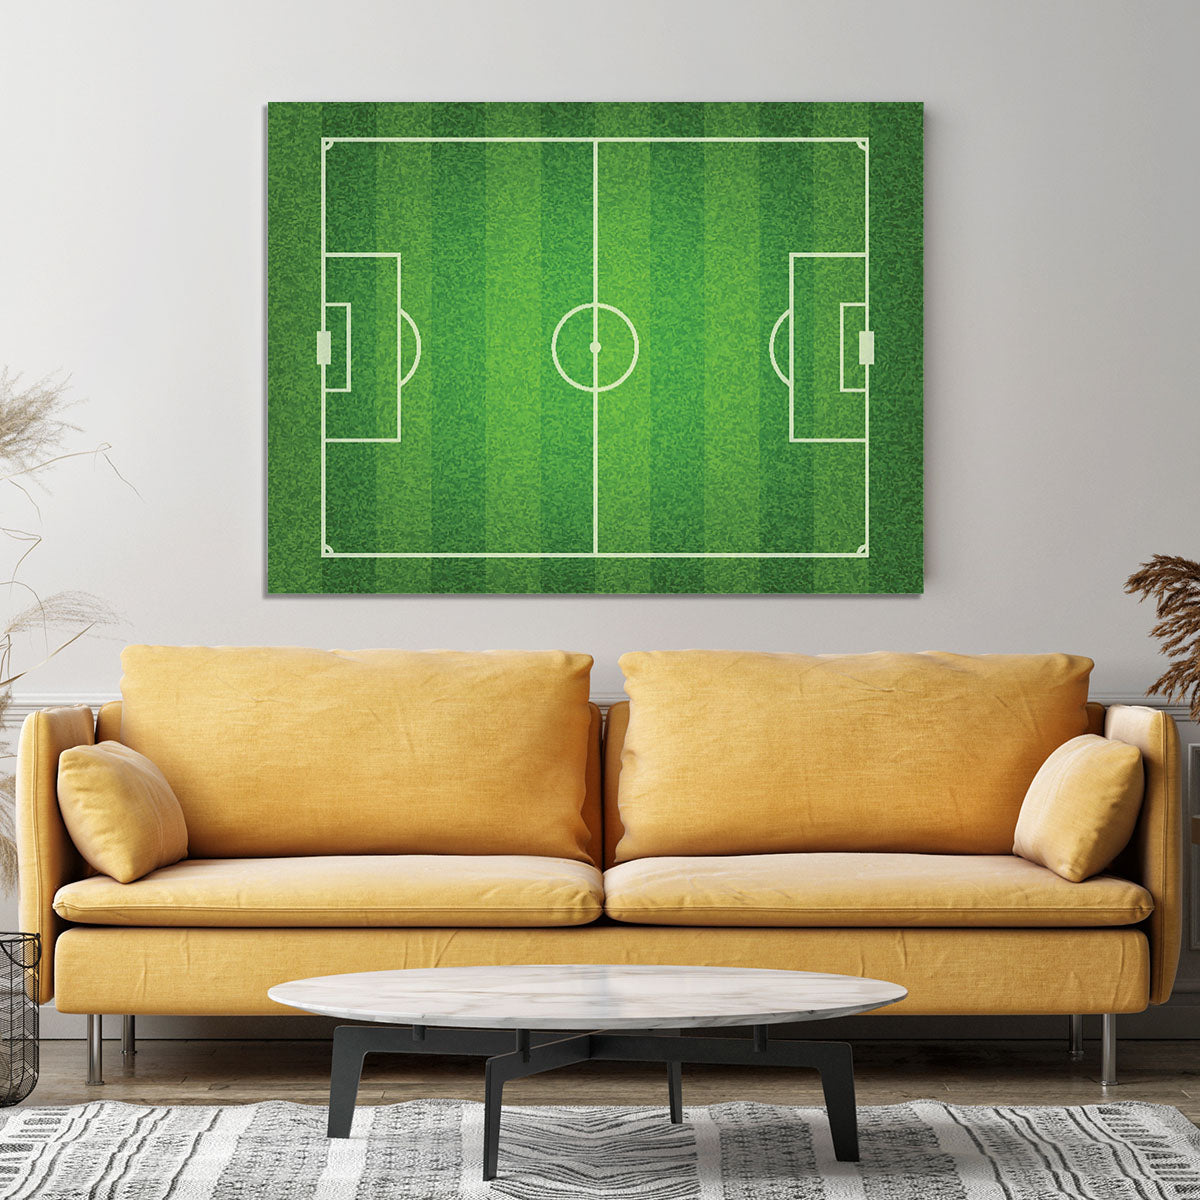 Green grass soccer field Canvas Print or Poster - Canvas Art Rocks - 4